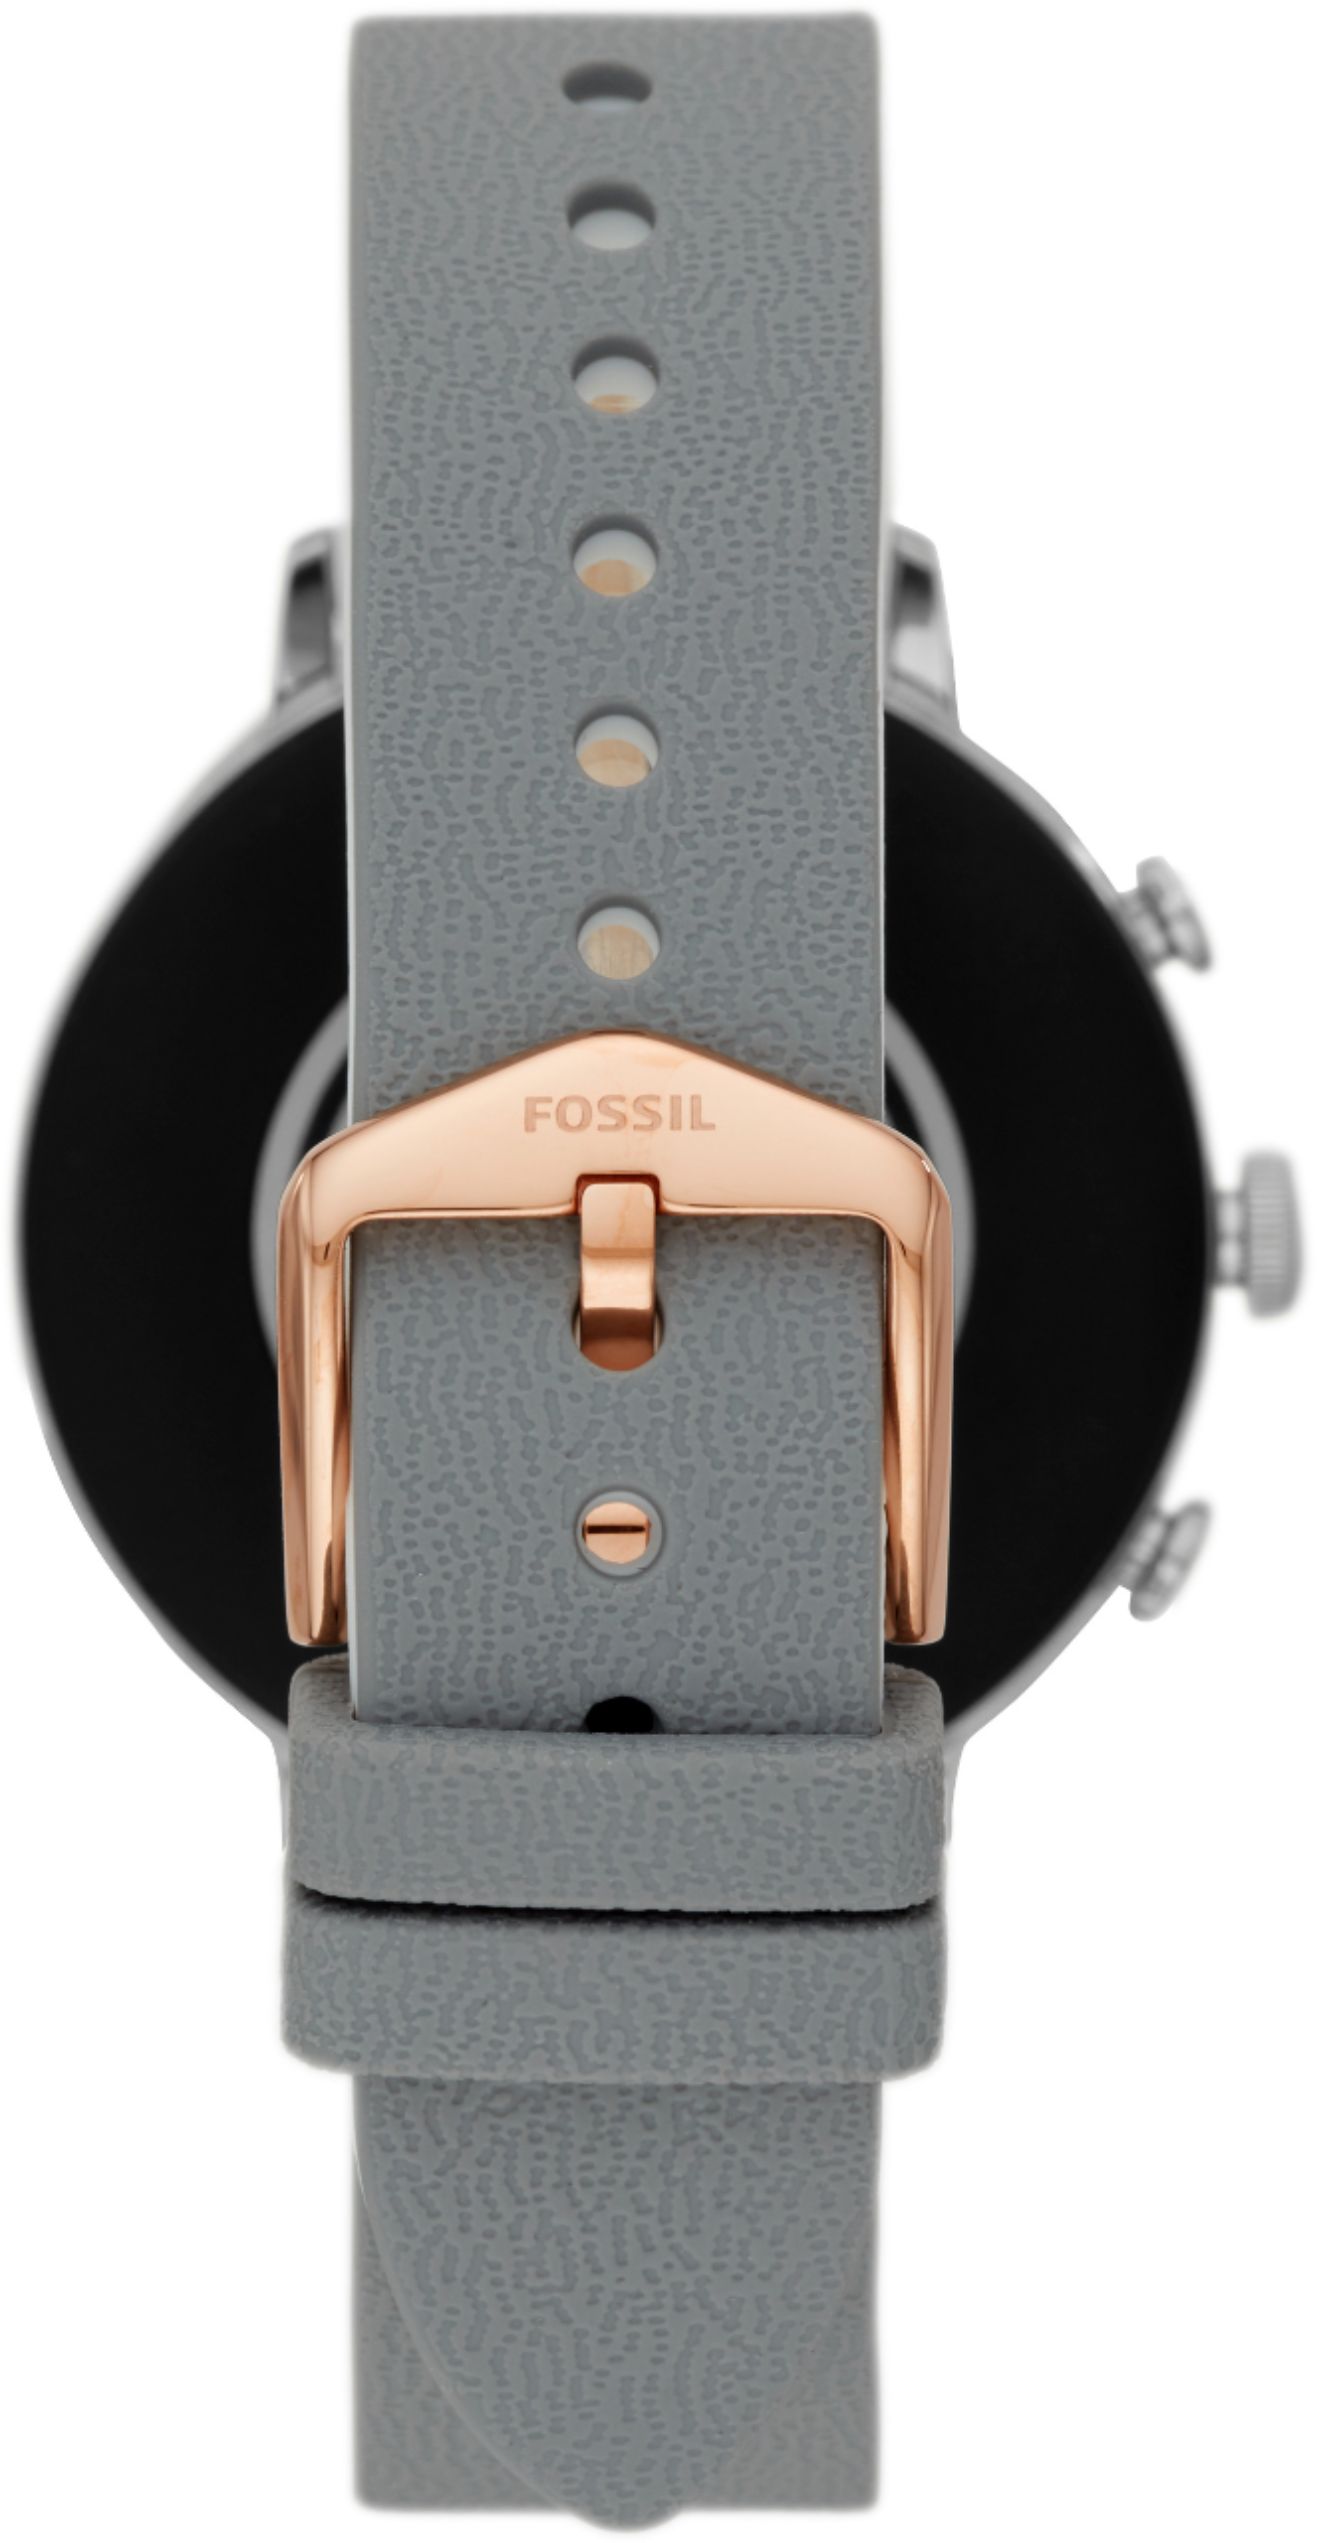 fossil q venture gen 4 rose gold silicone watch